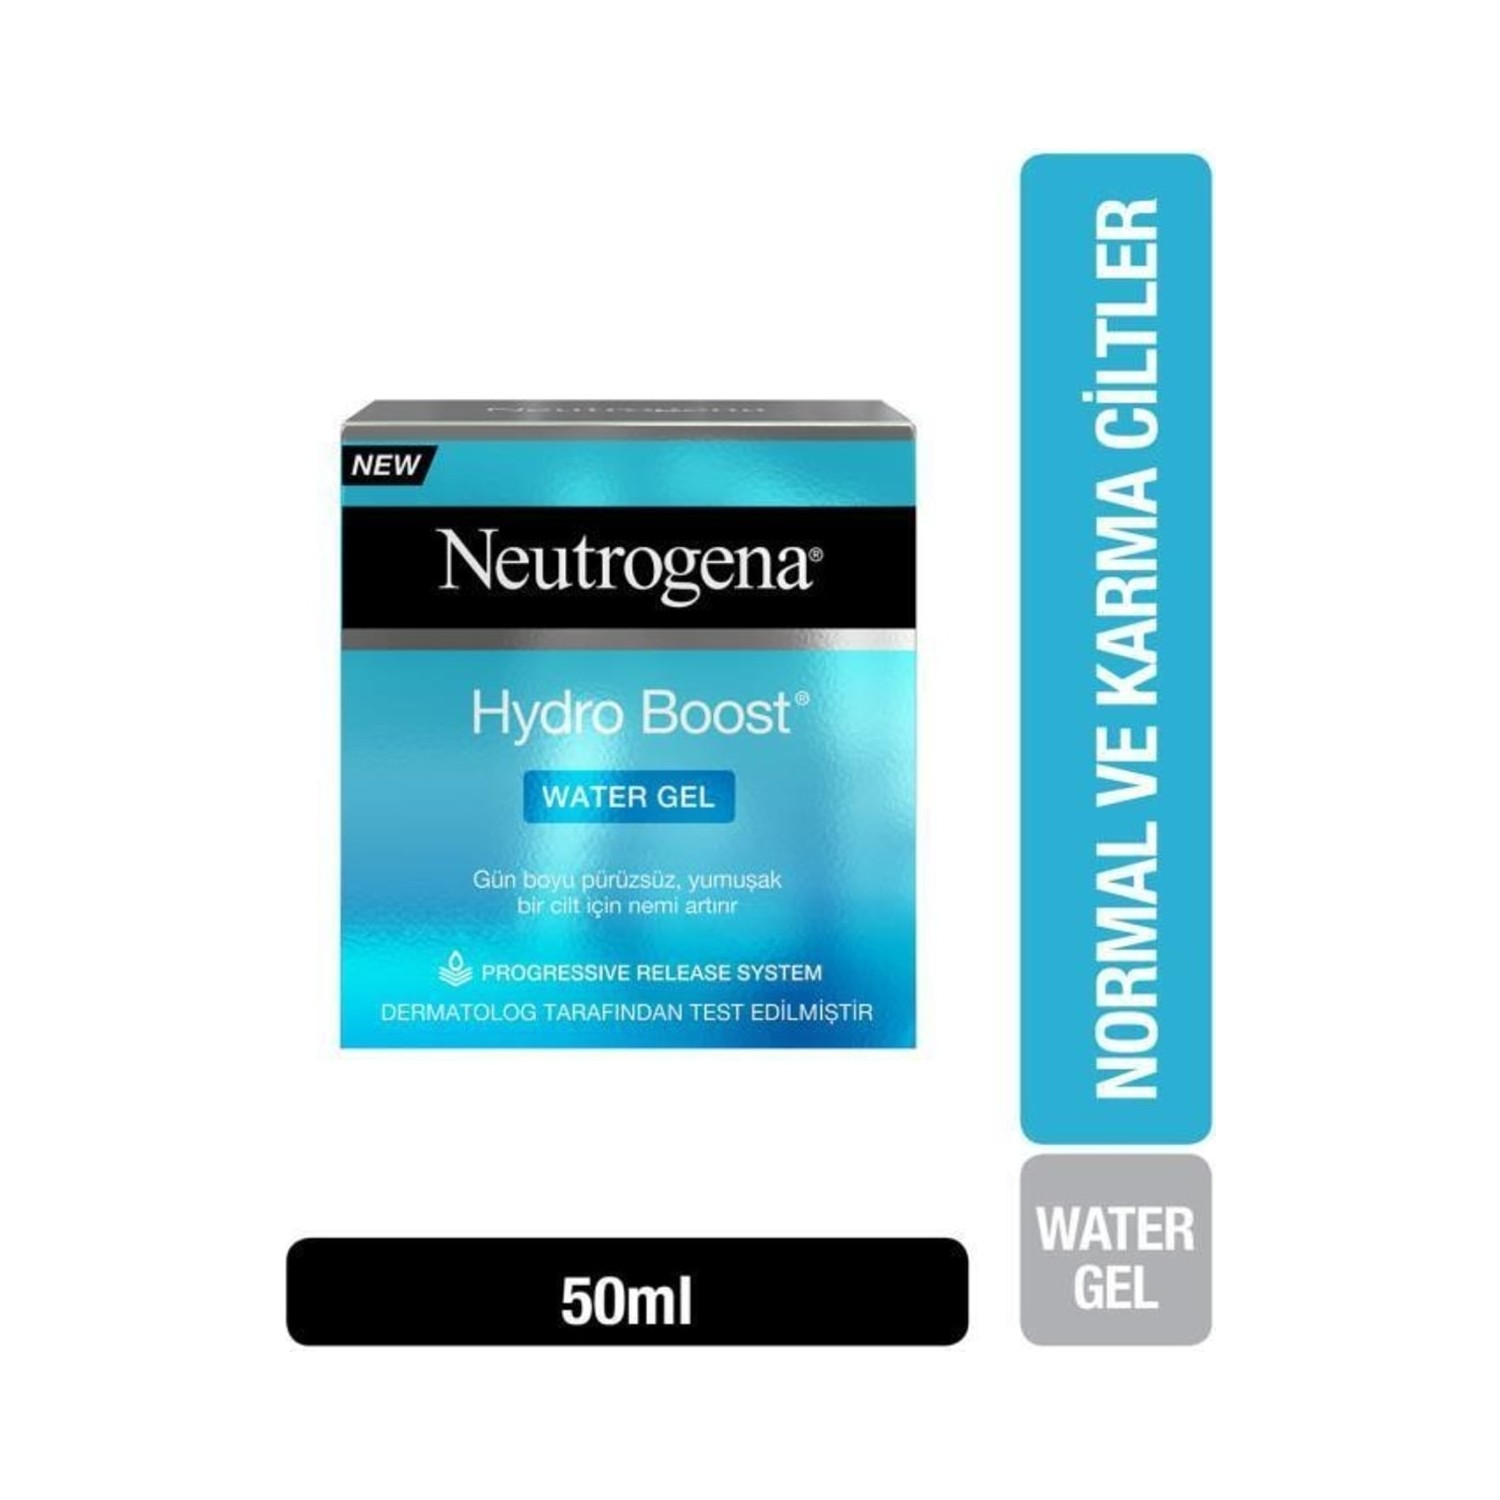 Увлажняющий крем для лица Neutrogena Hydro Boost Water Gel, 50 мл neutrogena hydro boost увлажняющий консилер светлый 20 3 4 г 0 12 унции